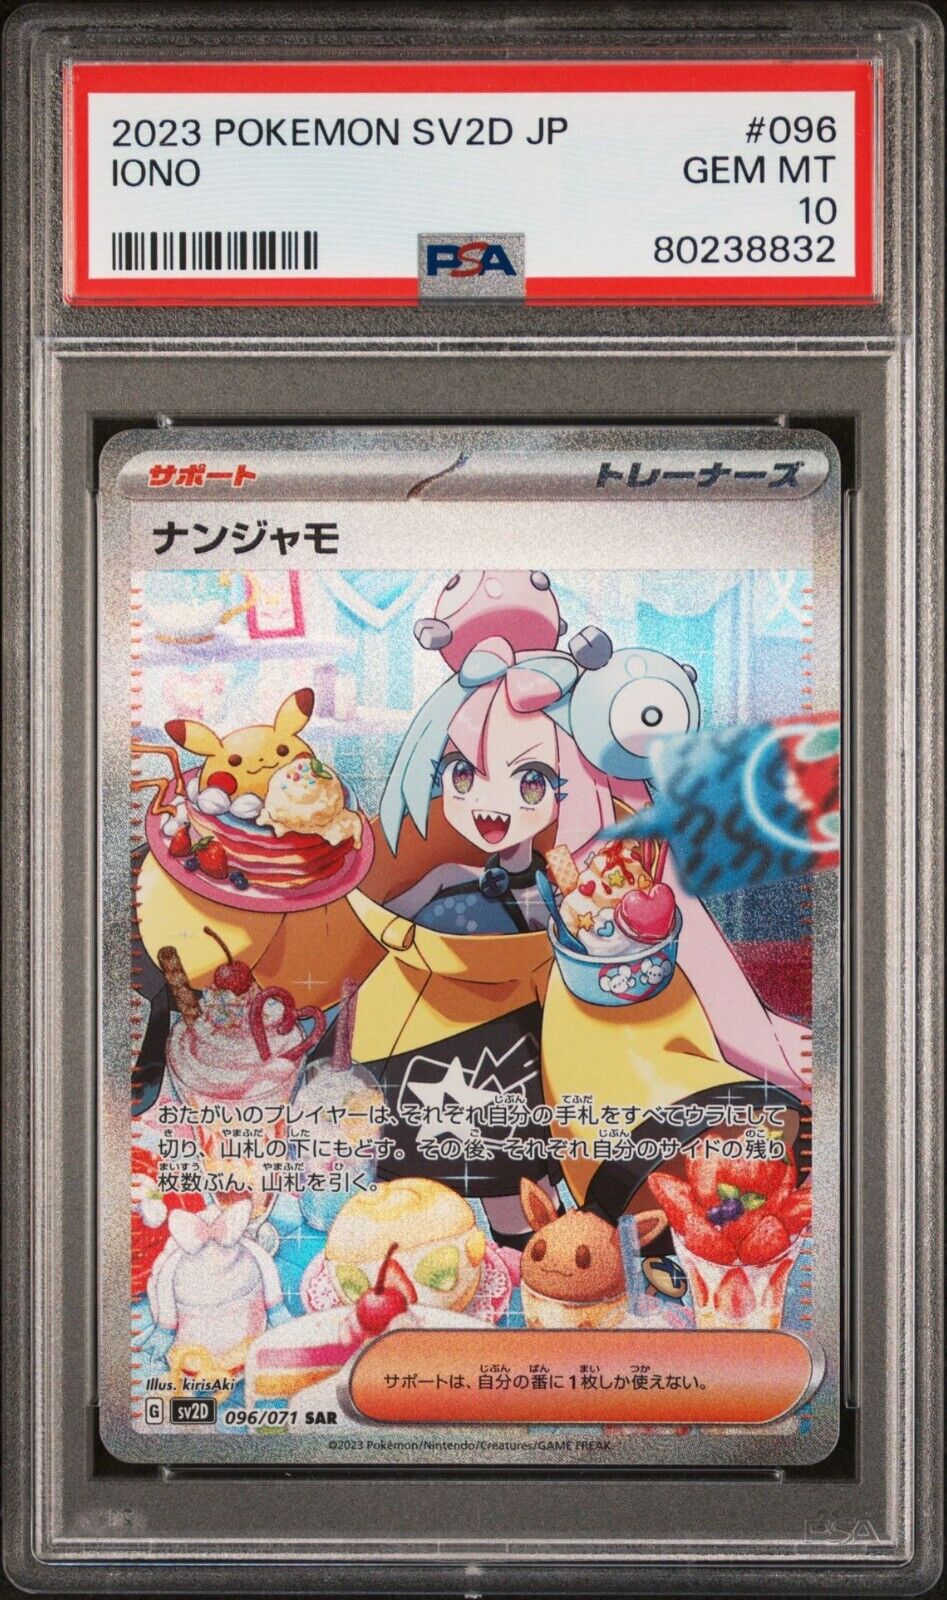 PSA 10  Iono 096  JAPANESE  Pokemon 2023 sv2d Clay Burst